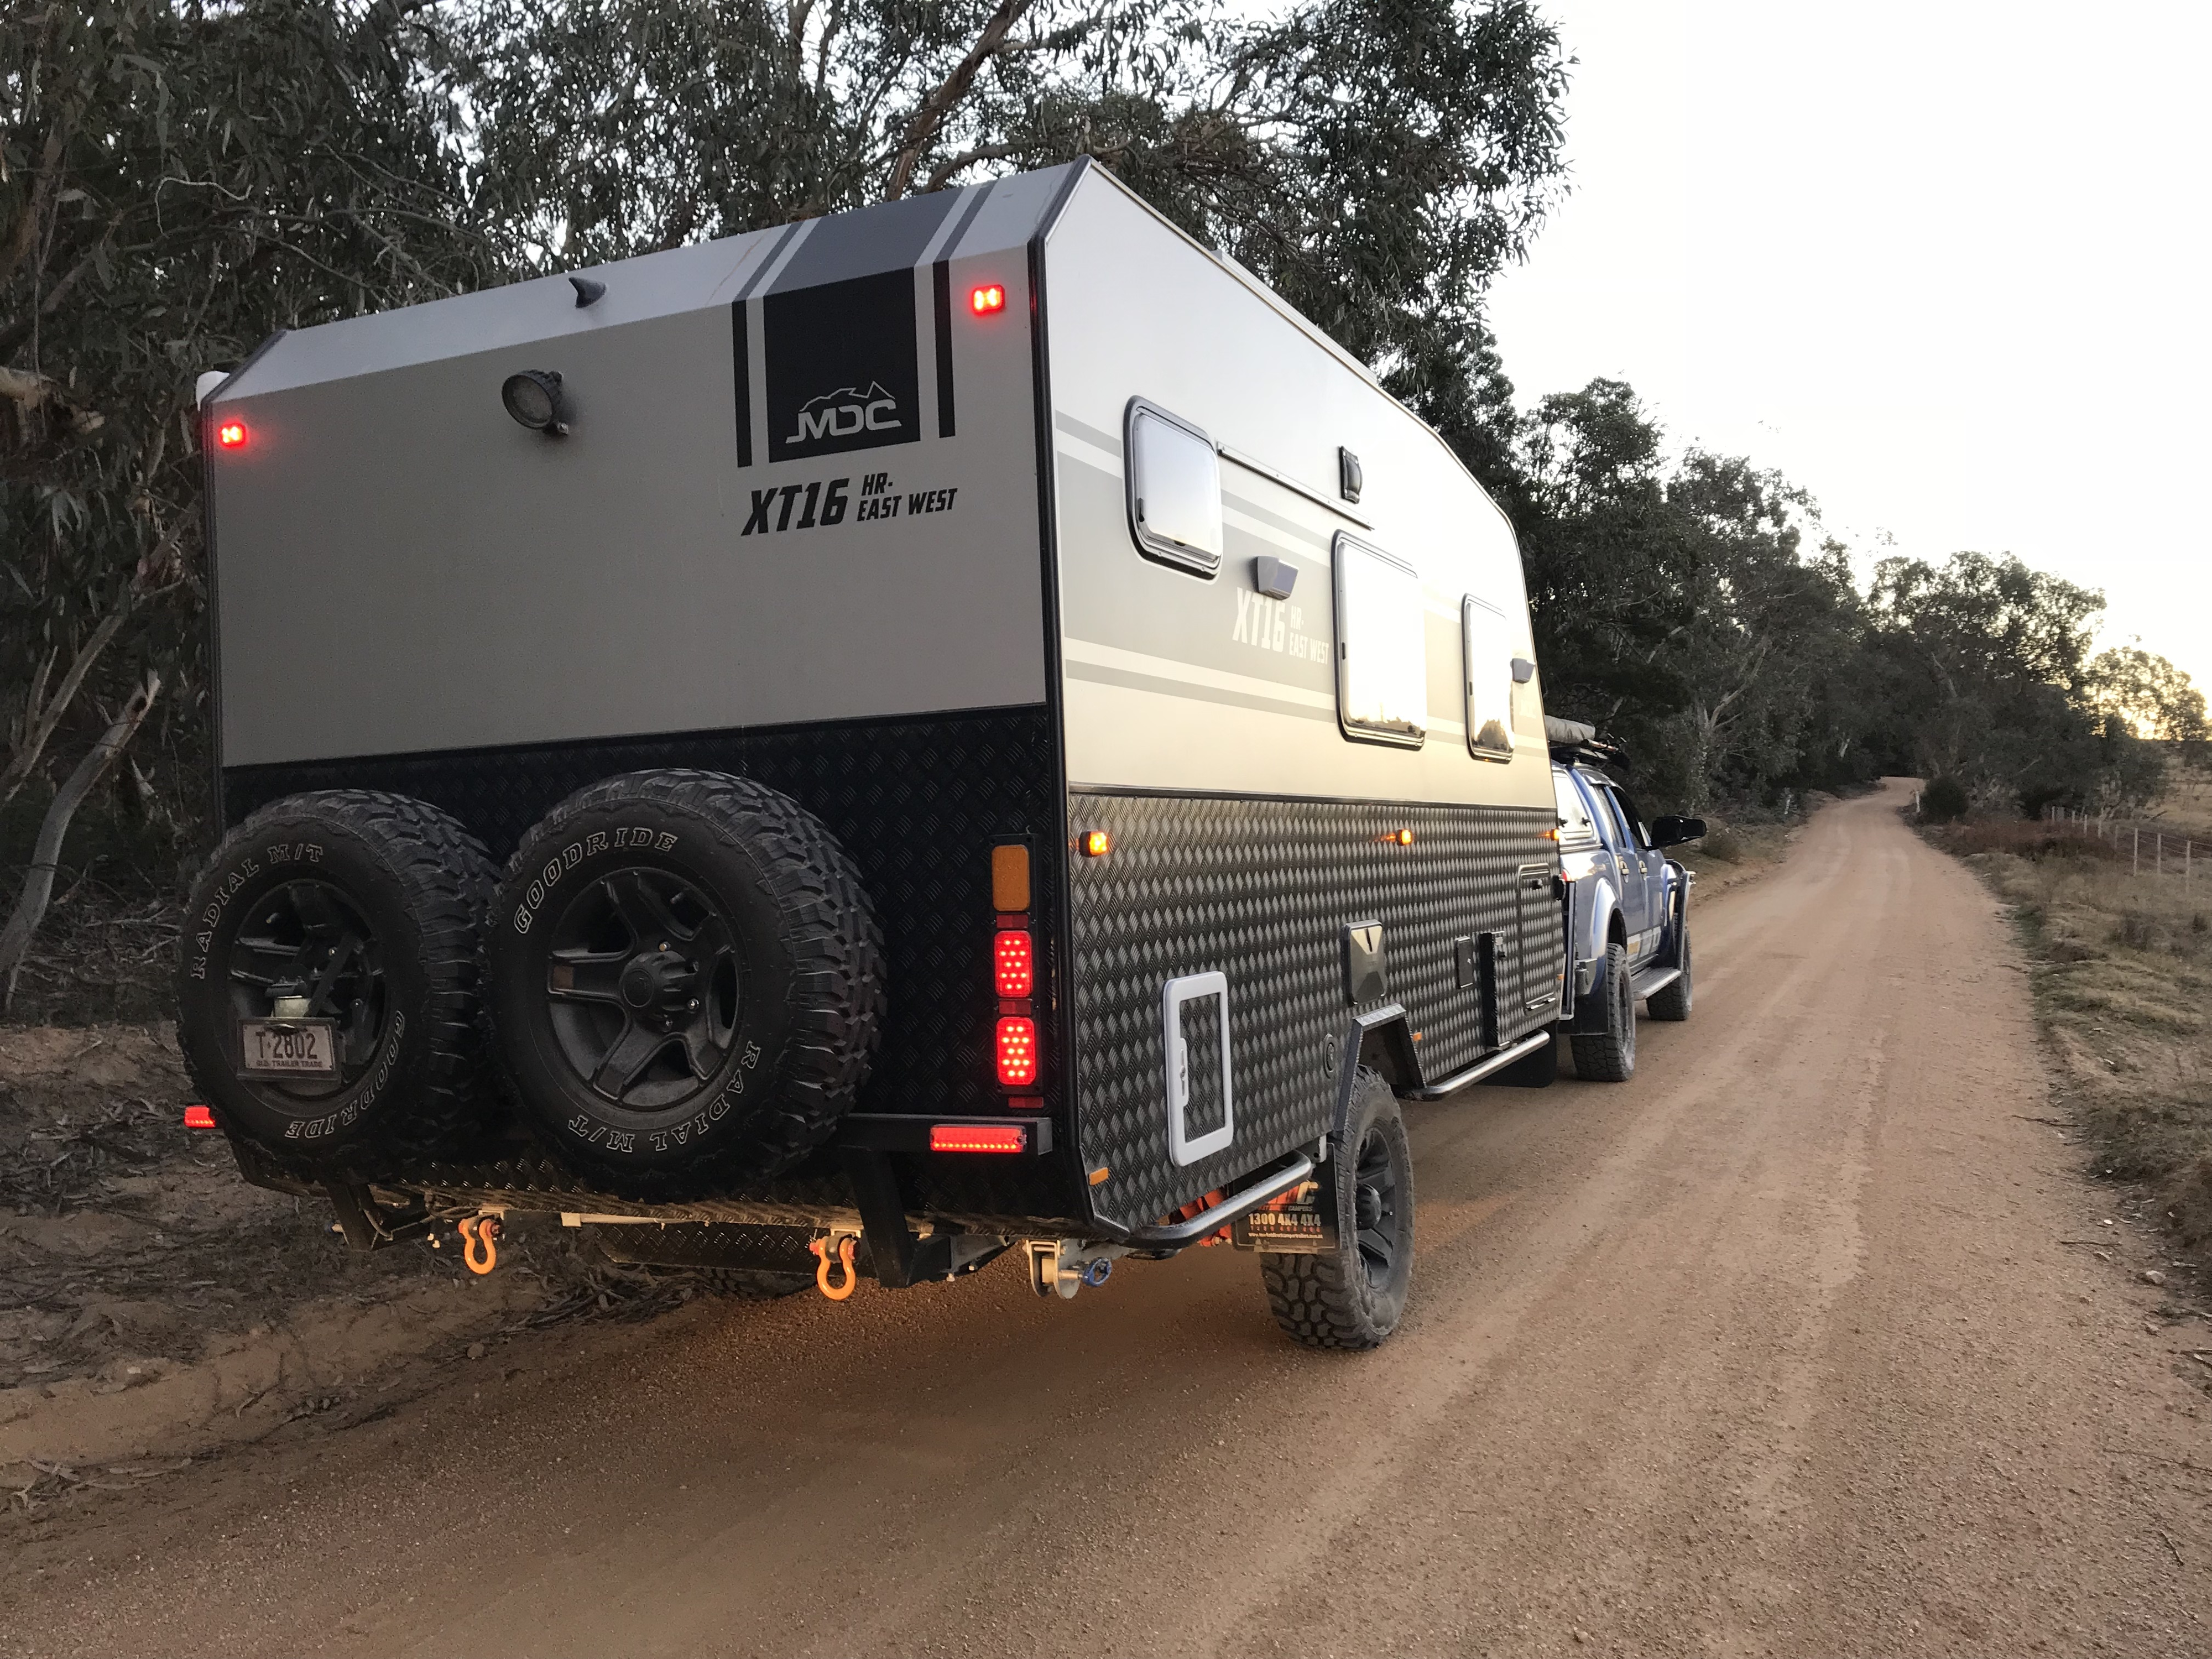 Road Trips Australia Episode 16